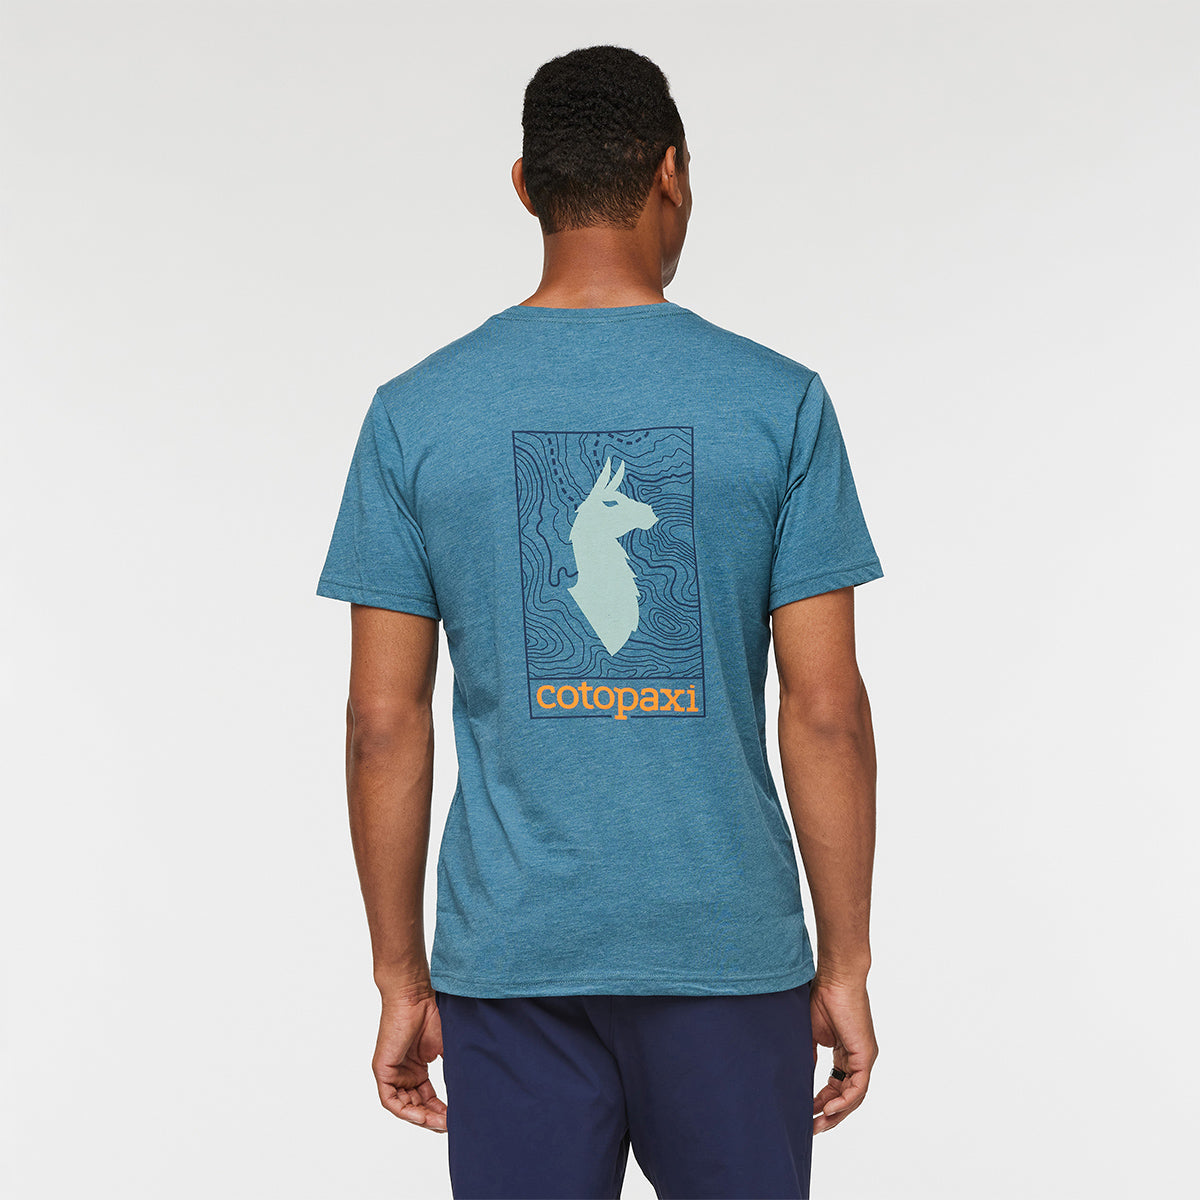 Cotopaxi Llama Map T-Shirt - MENS ラママップ ティーシャツ メンズ